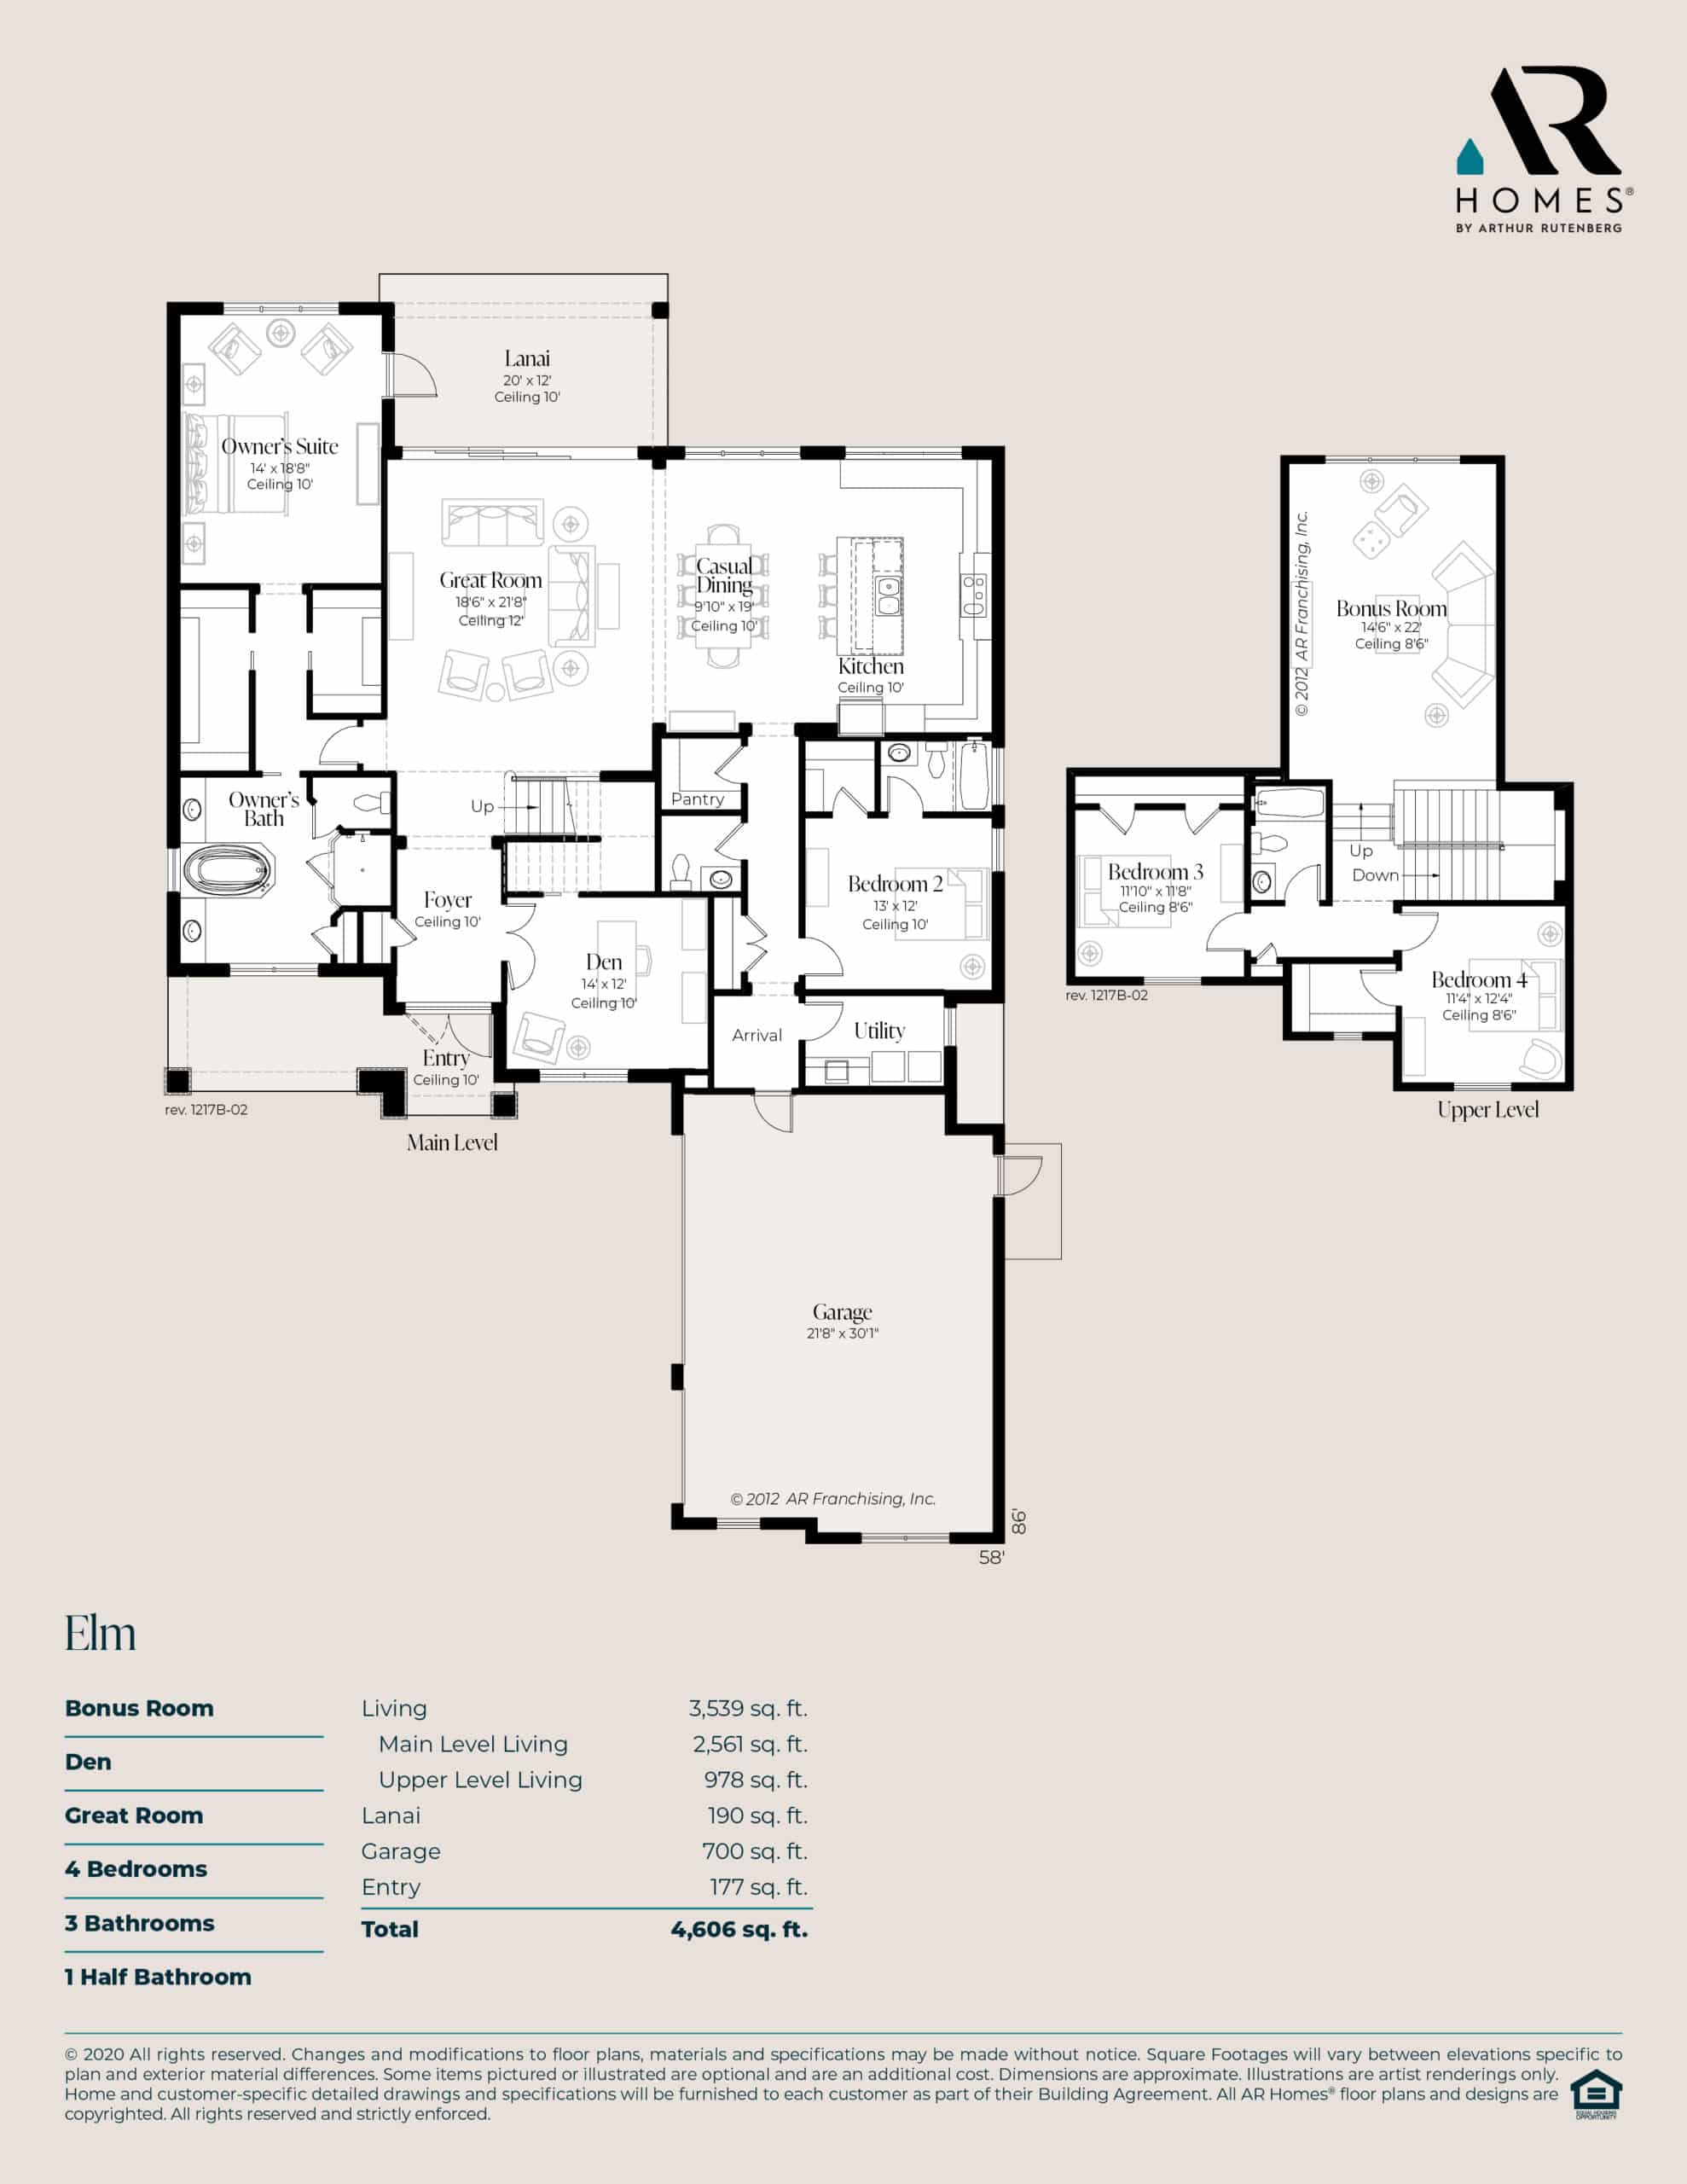 The Elm Plan Ar Homes By Arthur Rutenberg